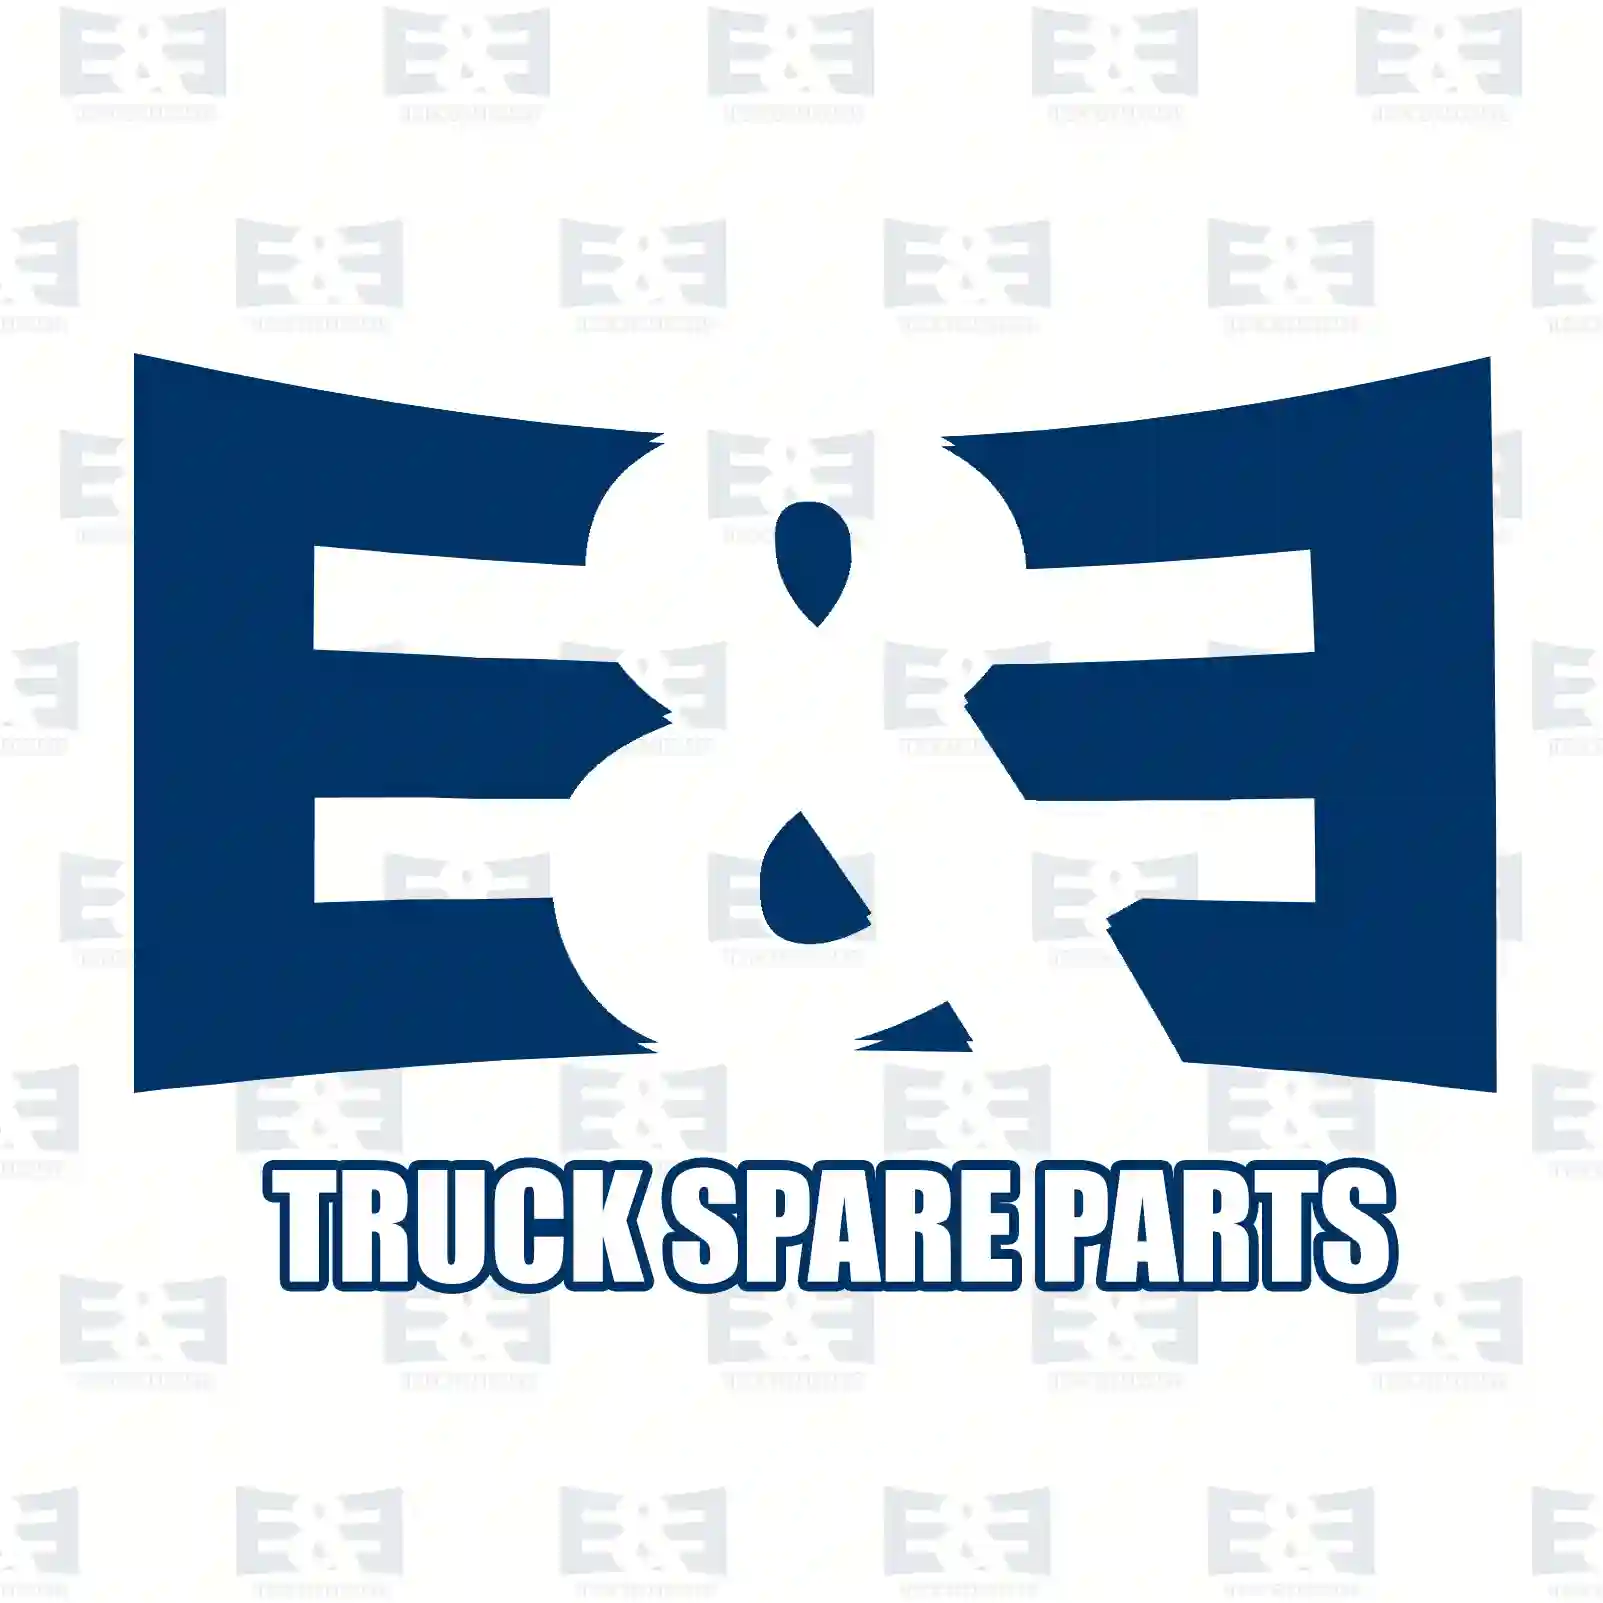 Drum brake lining kit, axle kit, 2E2294464, 0070709, 0070710, 0682421, 0682423, 0682859, 0683035, 0683276, 0683276S, 1808126, 682421, 682423, 682827, 682859, 683005, 683035, 683276, 683276S, 683288, 70709, 70710 ||  2E2294464 E&E Truck Spare Parts | Truck Spare Parts, Auotomotive Spare Parts Drum brake lining kit, axle kit, 2E2294464, 0070709, 0070710, 0682421, 0682423, 0682859, 0683035, 0683276, 0683276S, 1808126, 682421, 682423, 682827, 682859, 683005, 683035, 683276, 683276S, 683288, 70709, 70710 ||  2E2294464 E&E Truck Spare Parts | Truck Spare Parts, Auotomotive Spare Parts